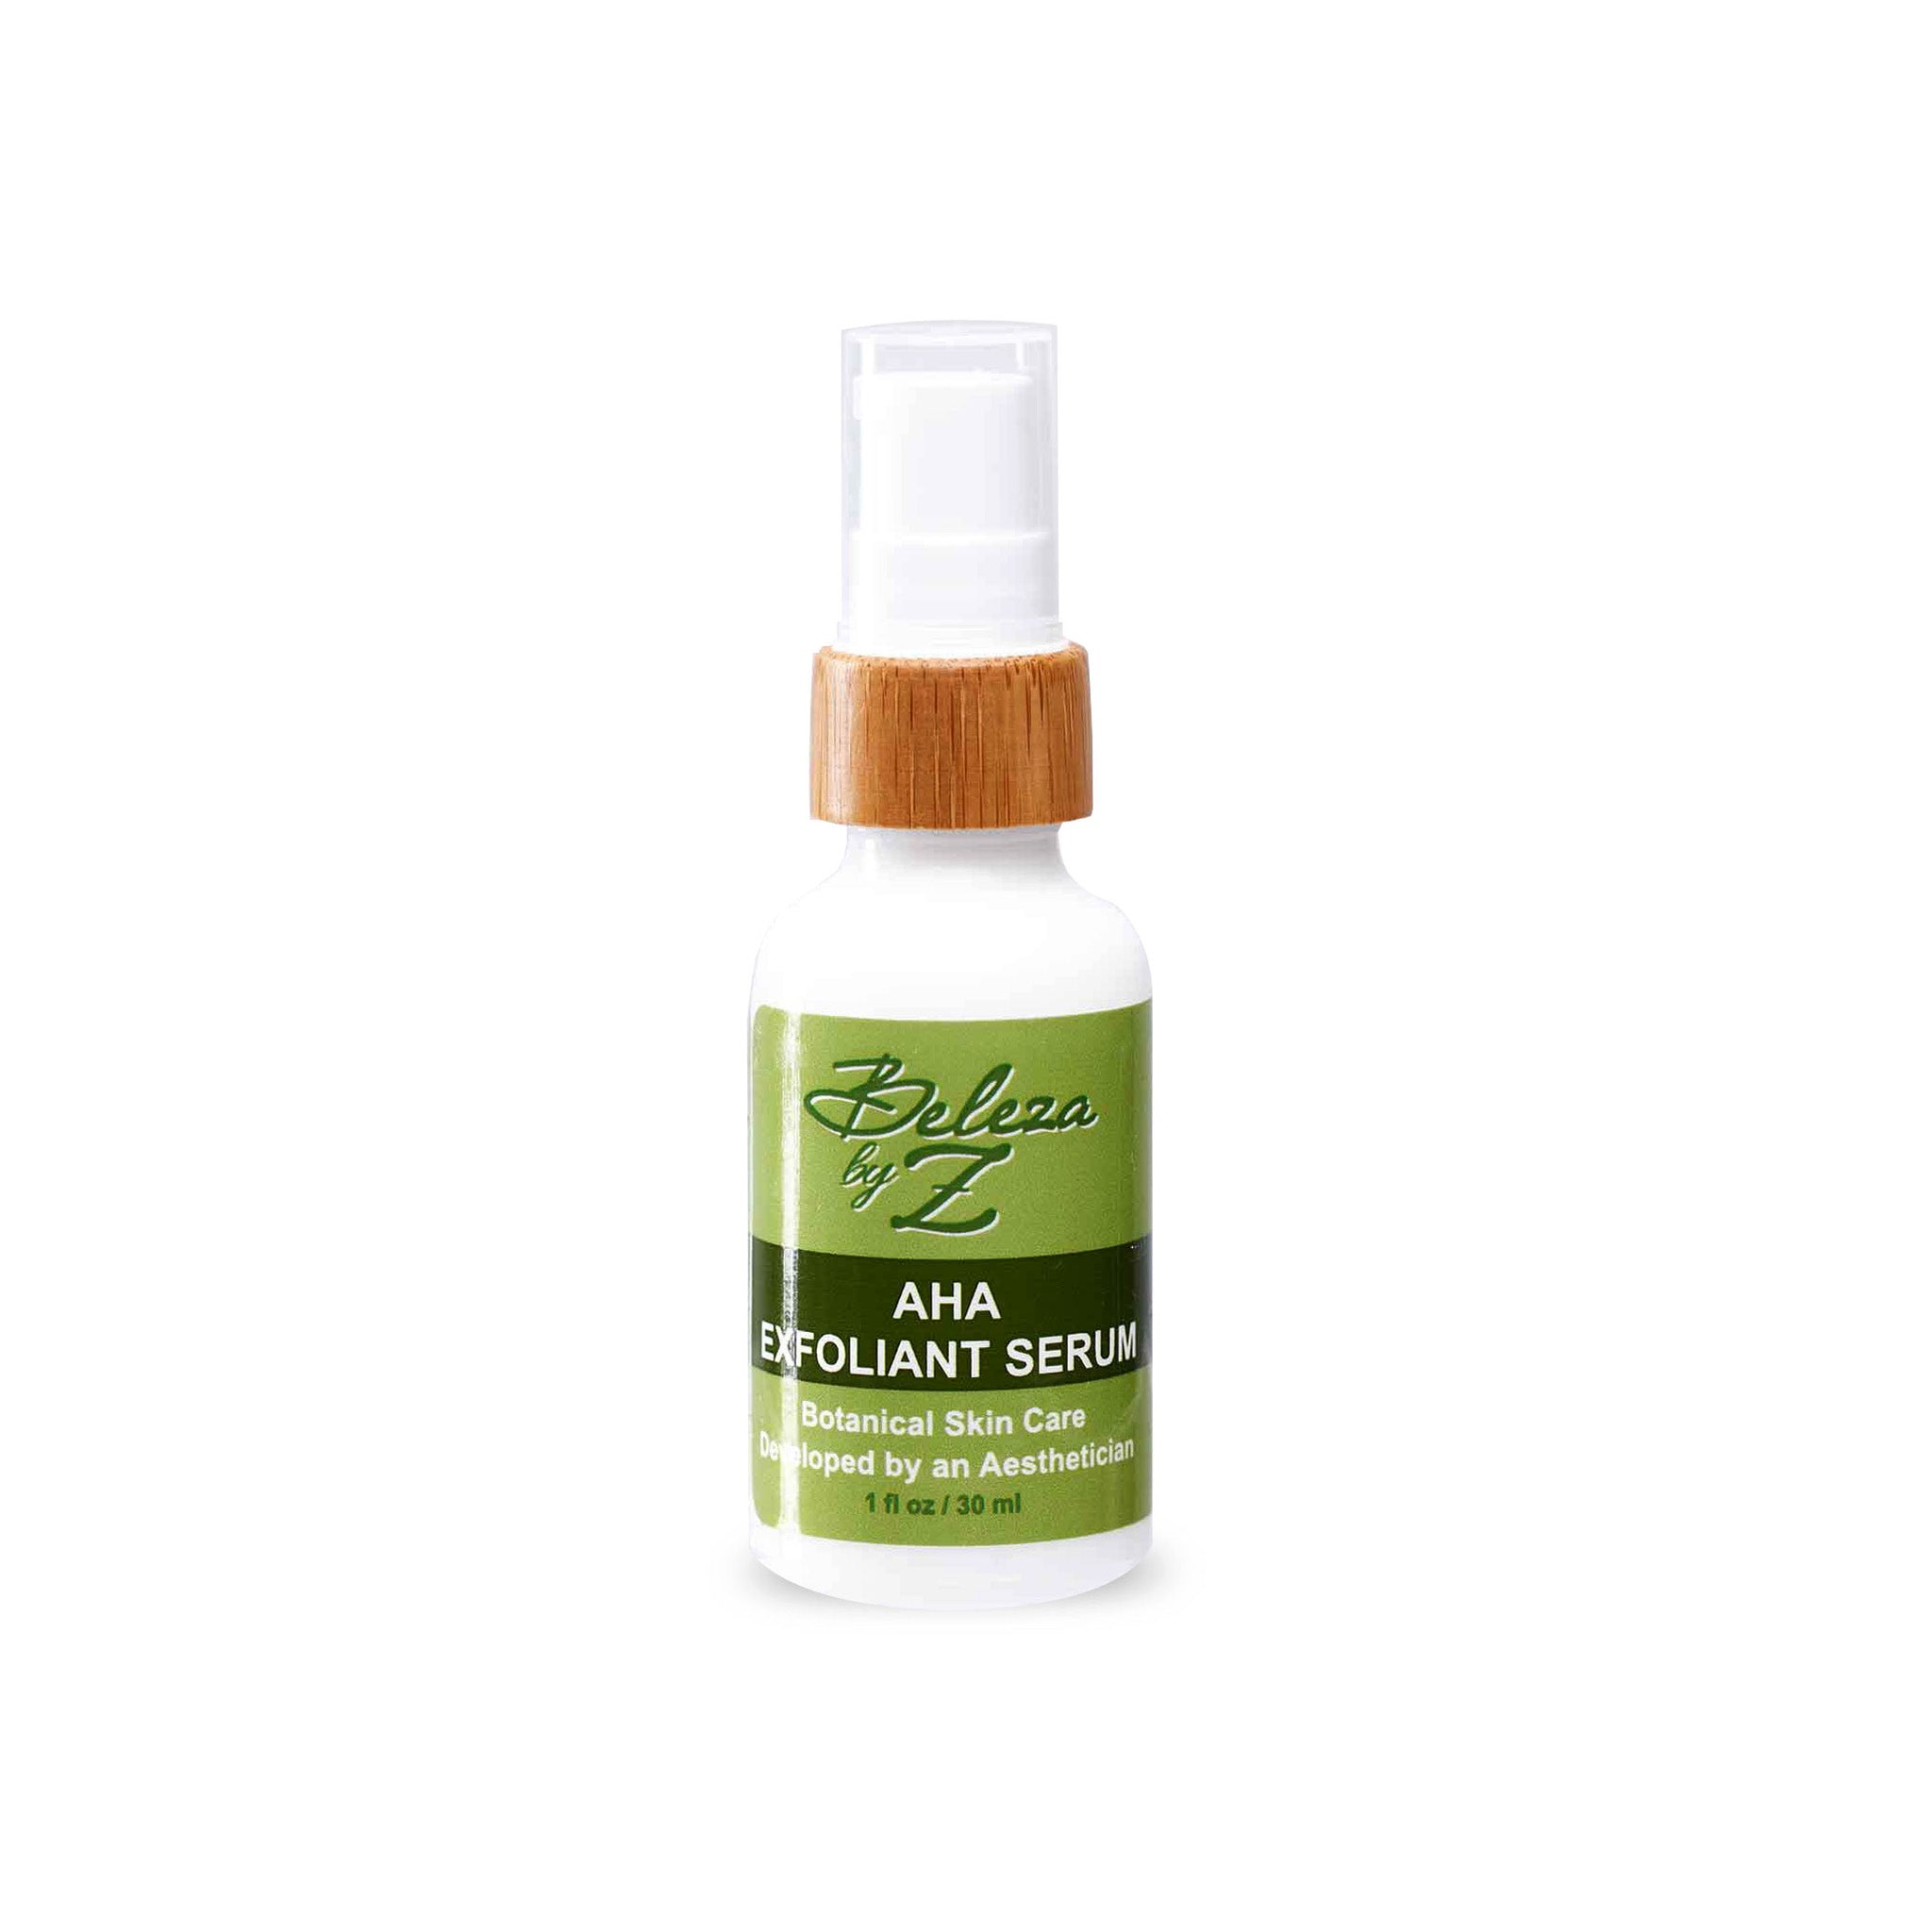 AHA Exfoliant Serum Botanical Skin Care